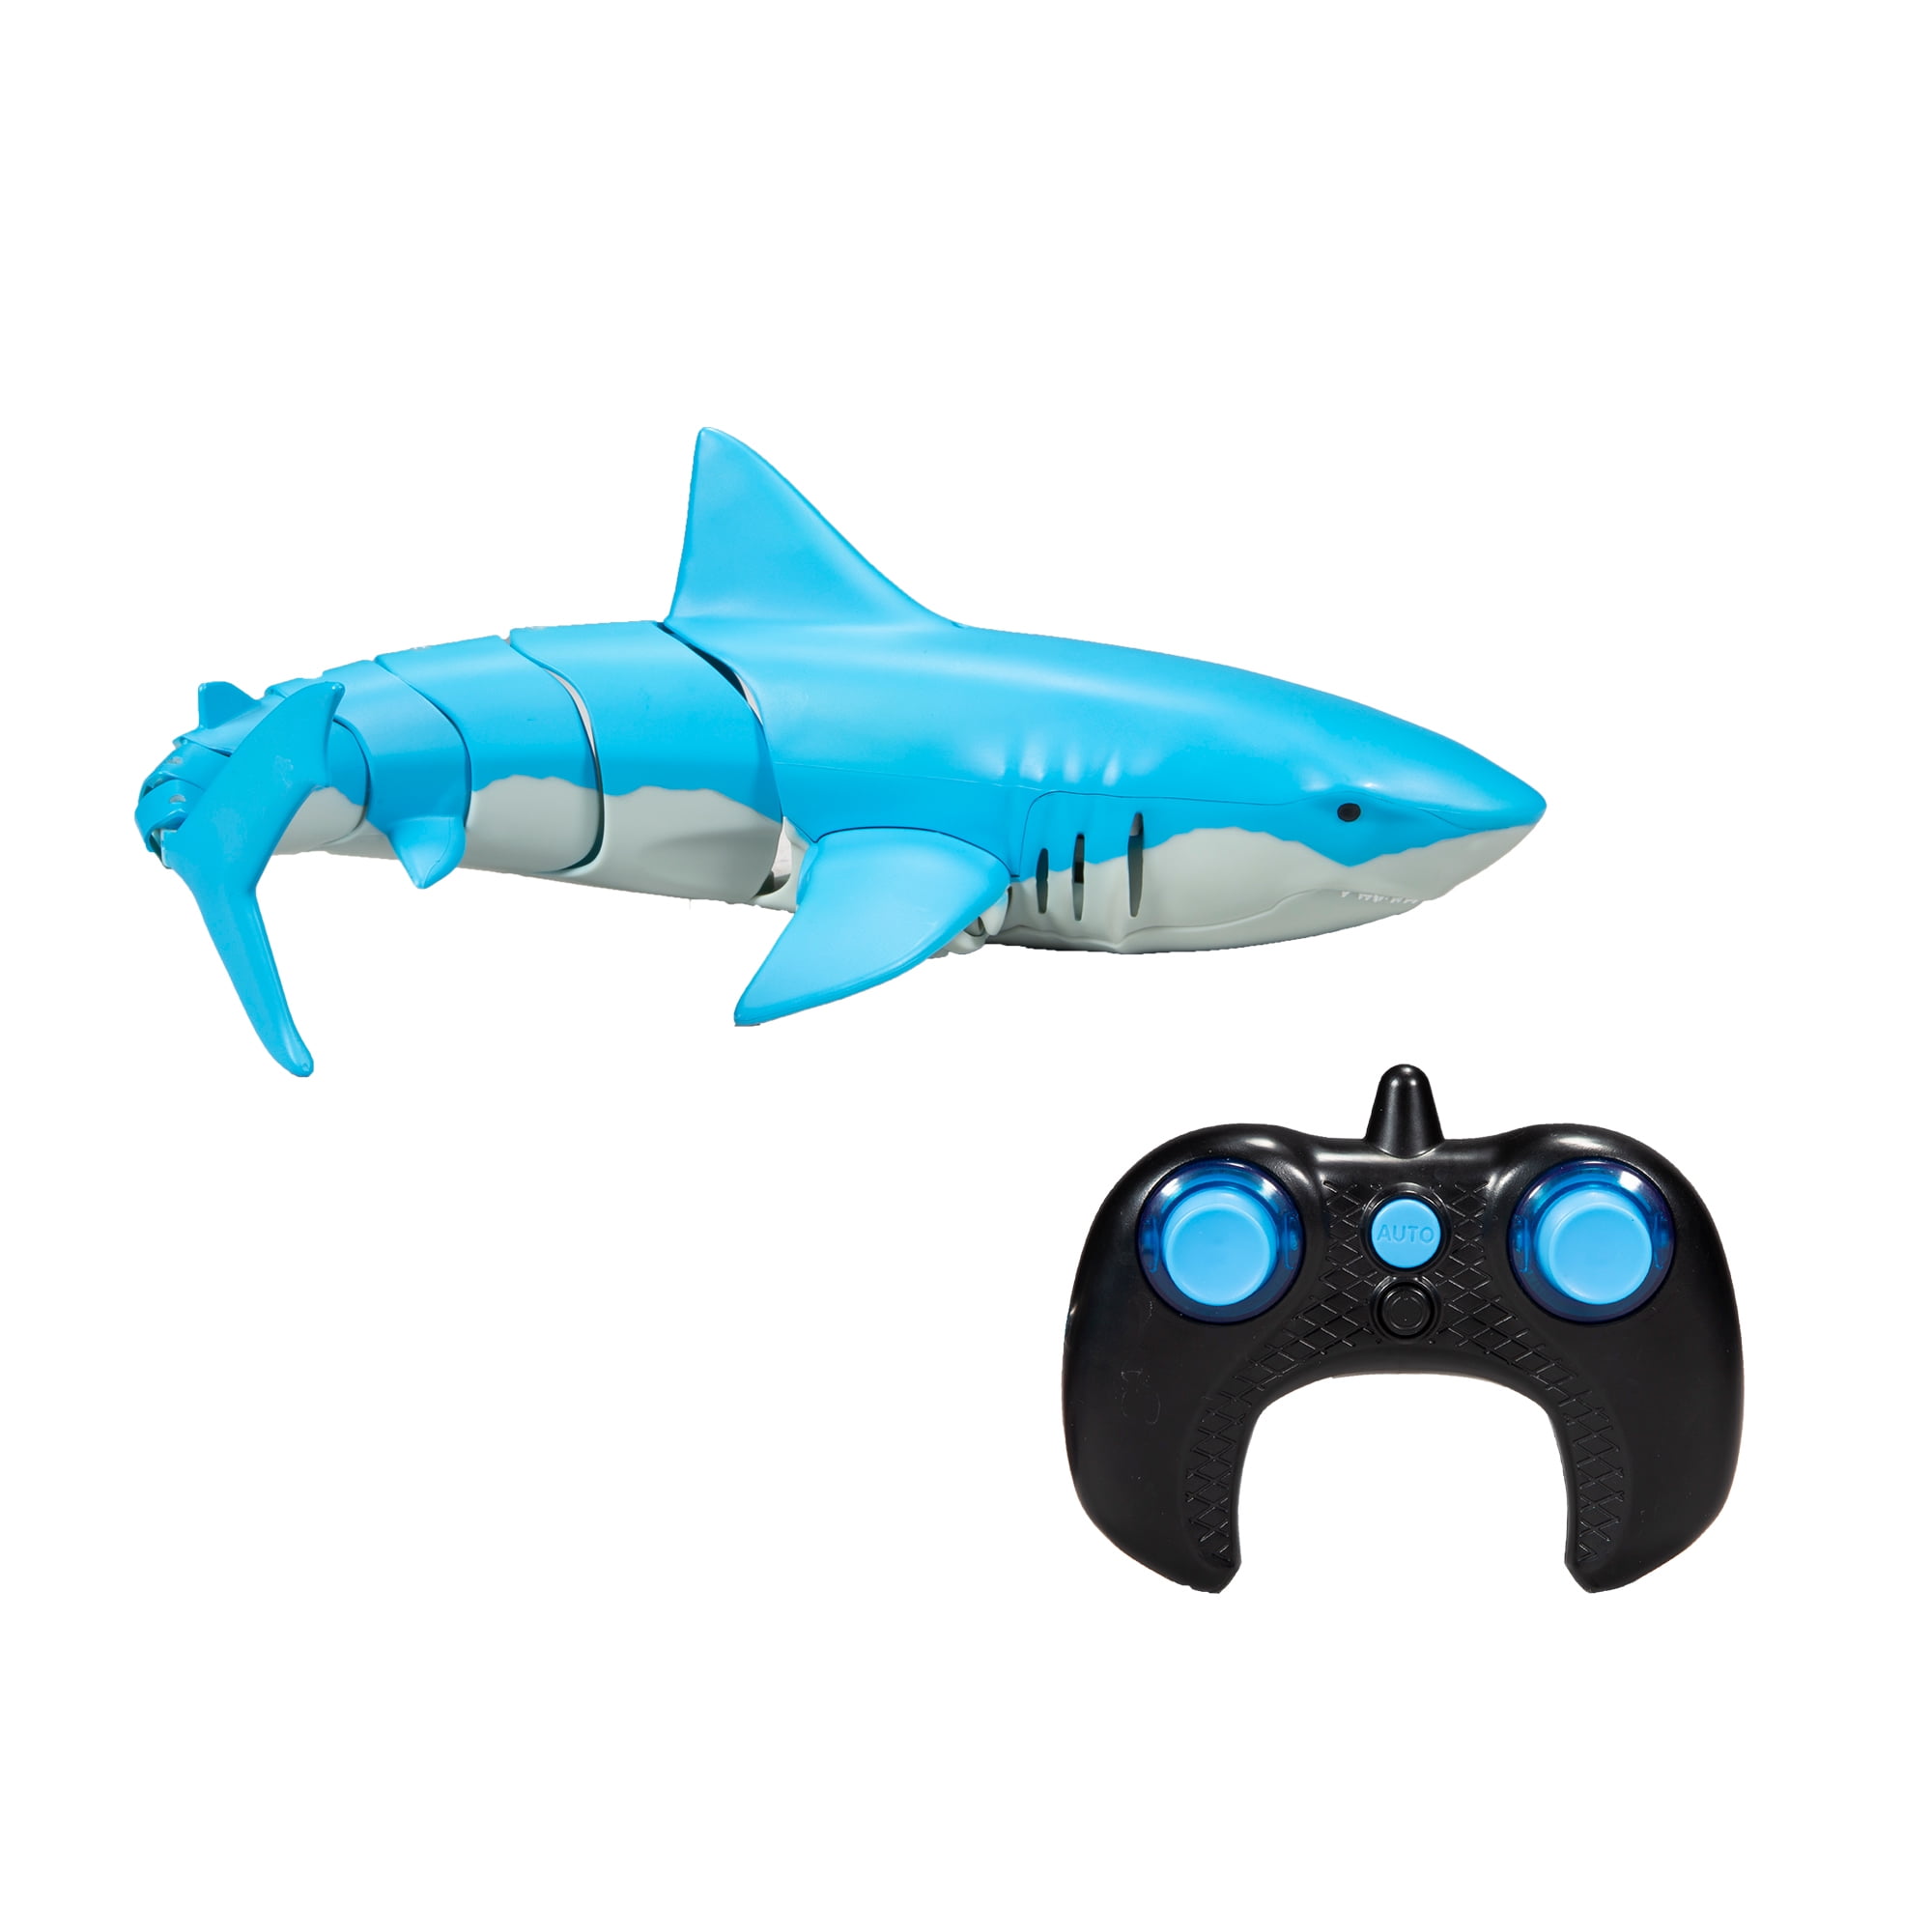 Mcfarlane Rc Shark Shark - Walmart.com 